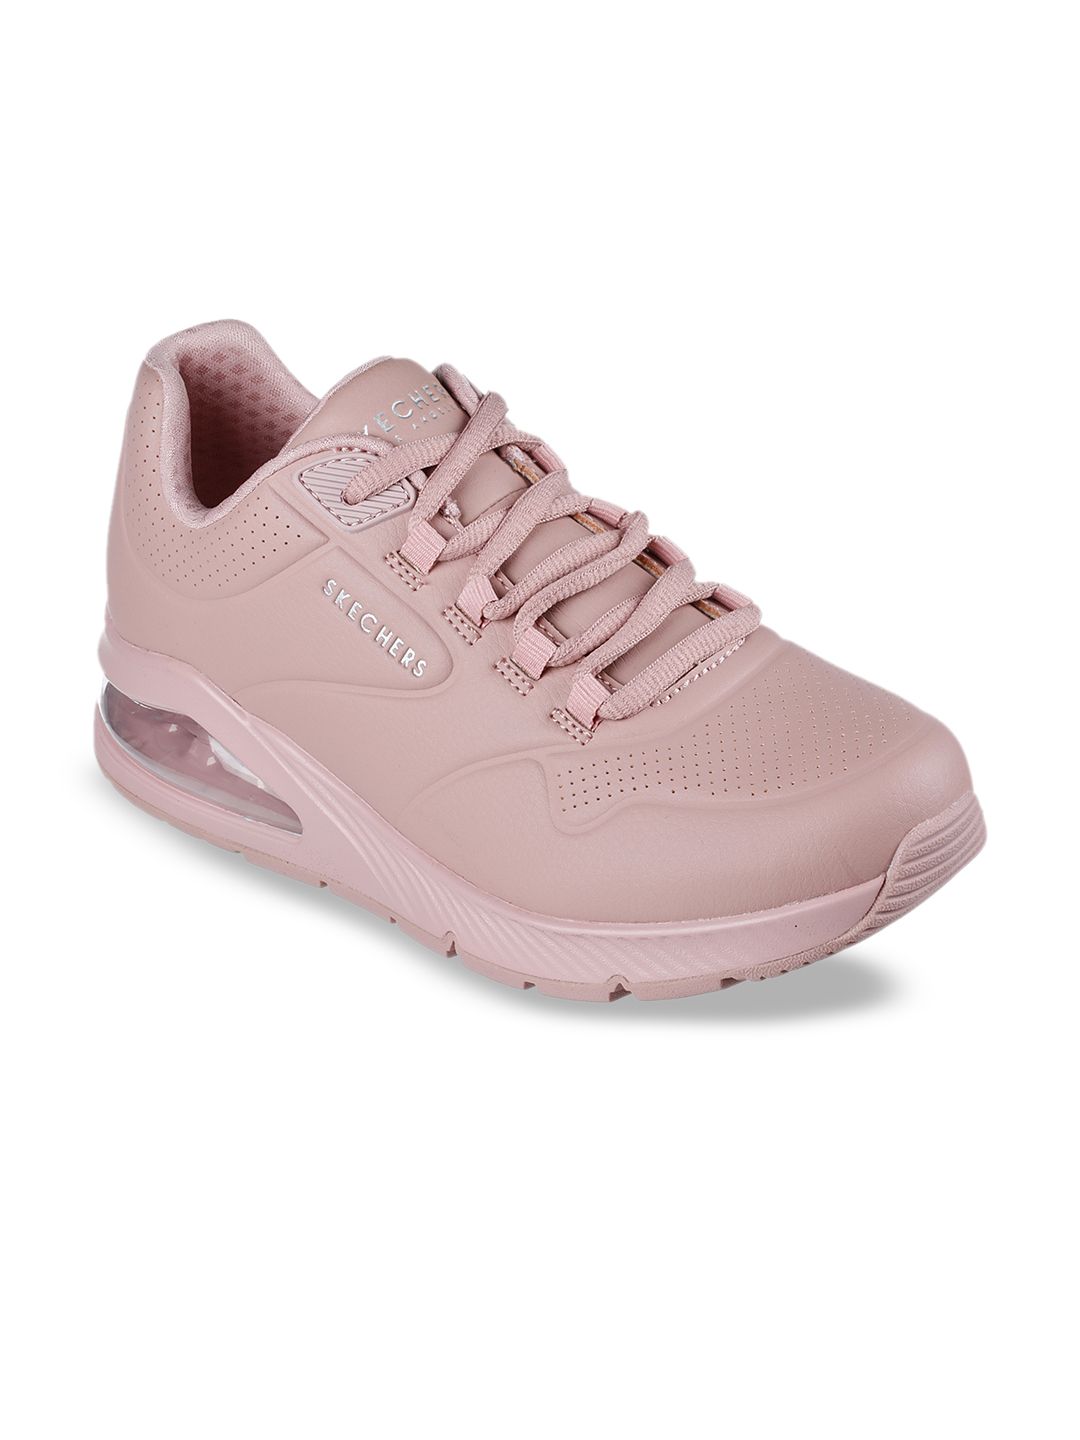 Skechers Women Pink Perforations Sneakers Price in India